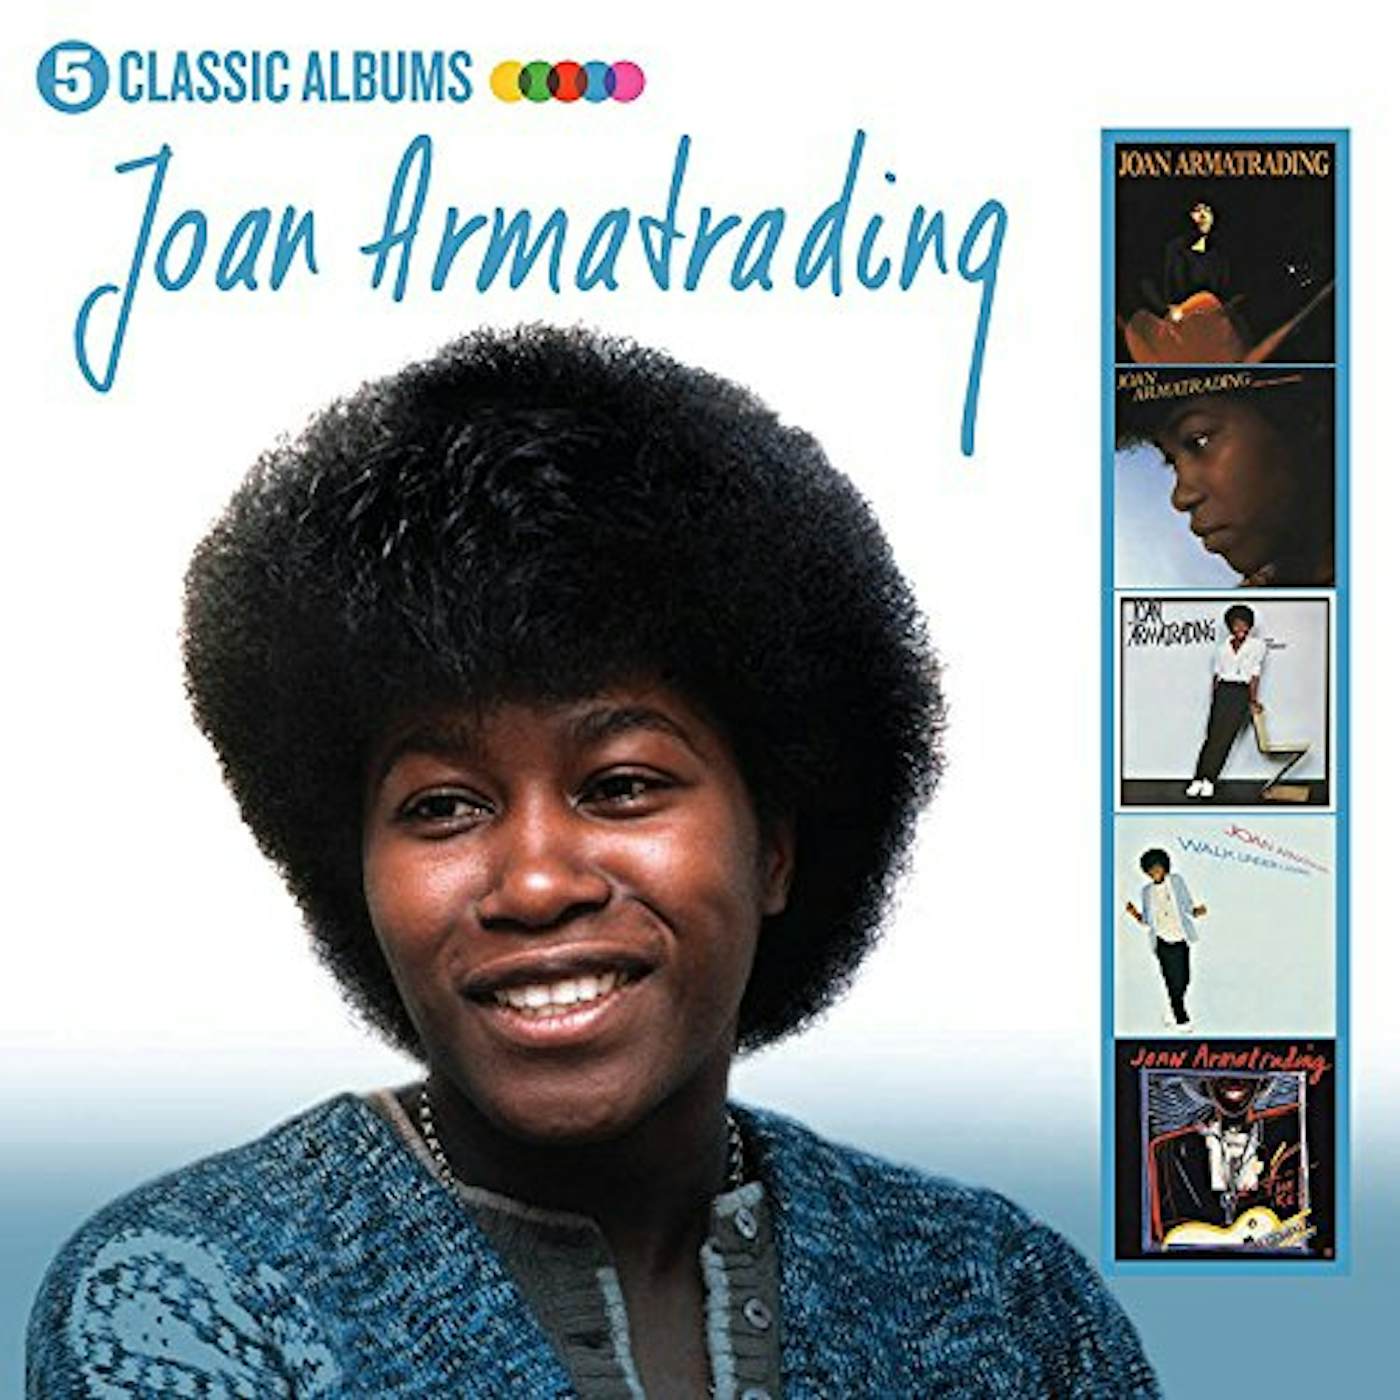 Joan Armatrading 5 CLASSIC ALBUMS CD